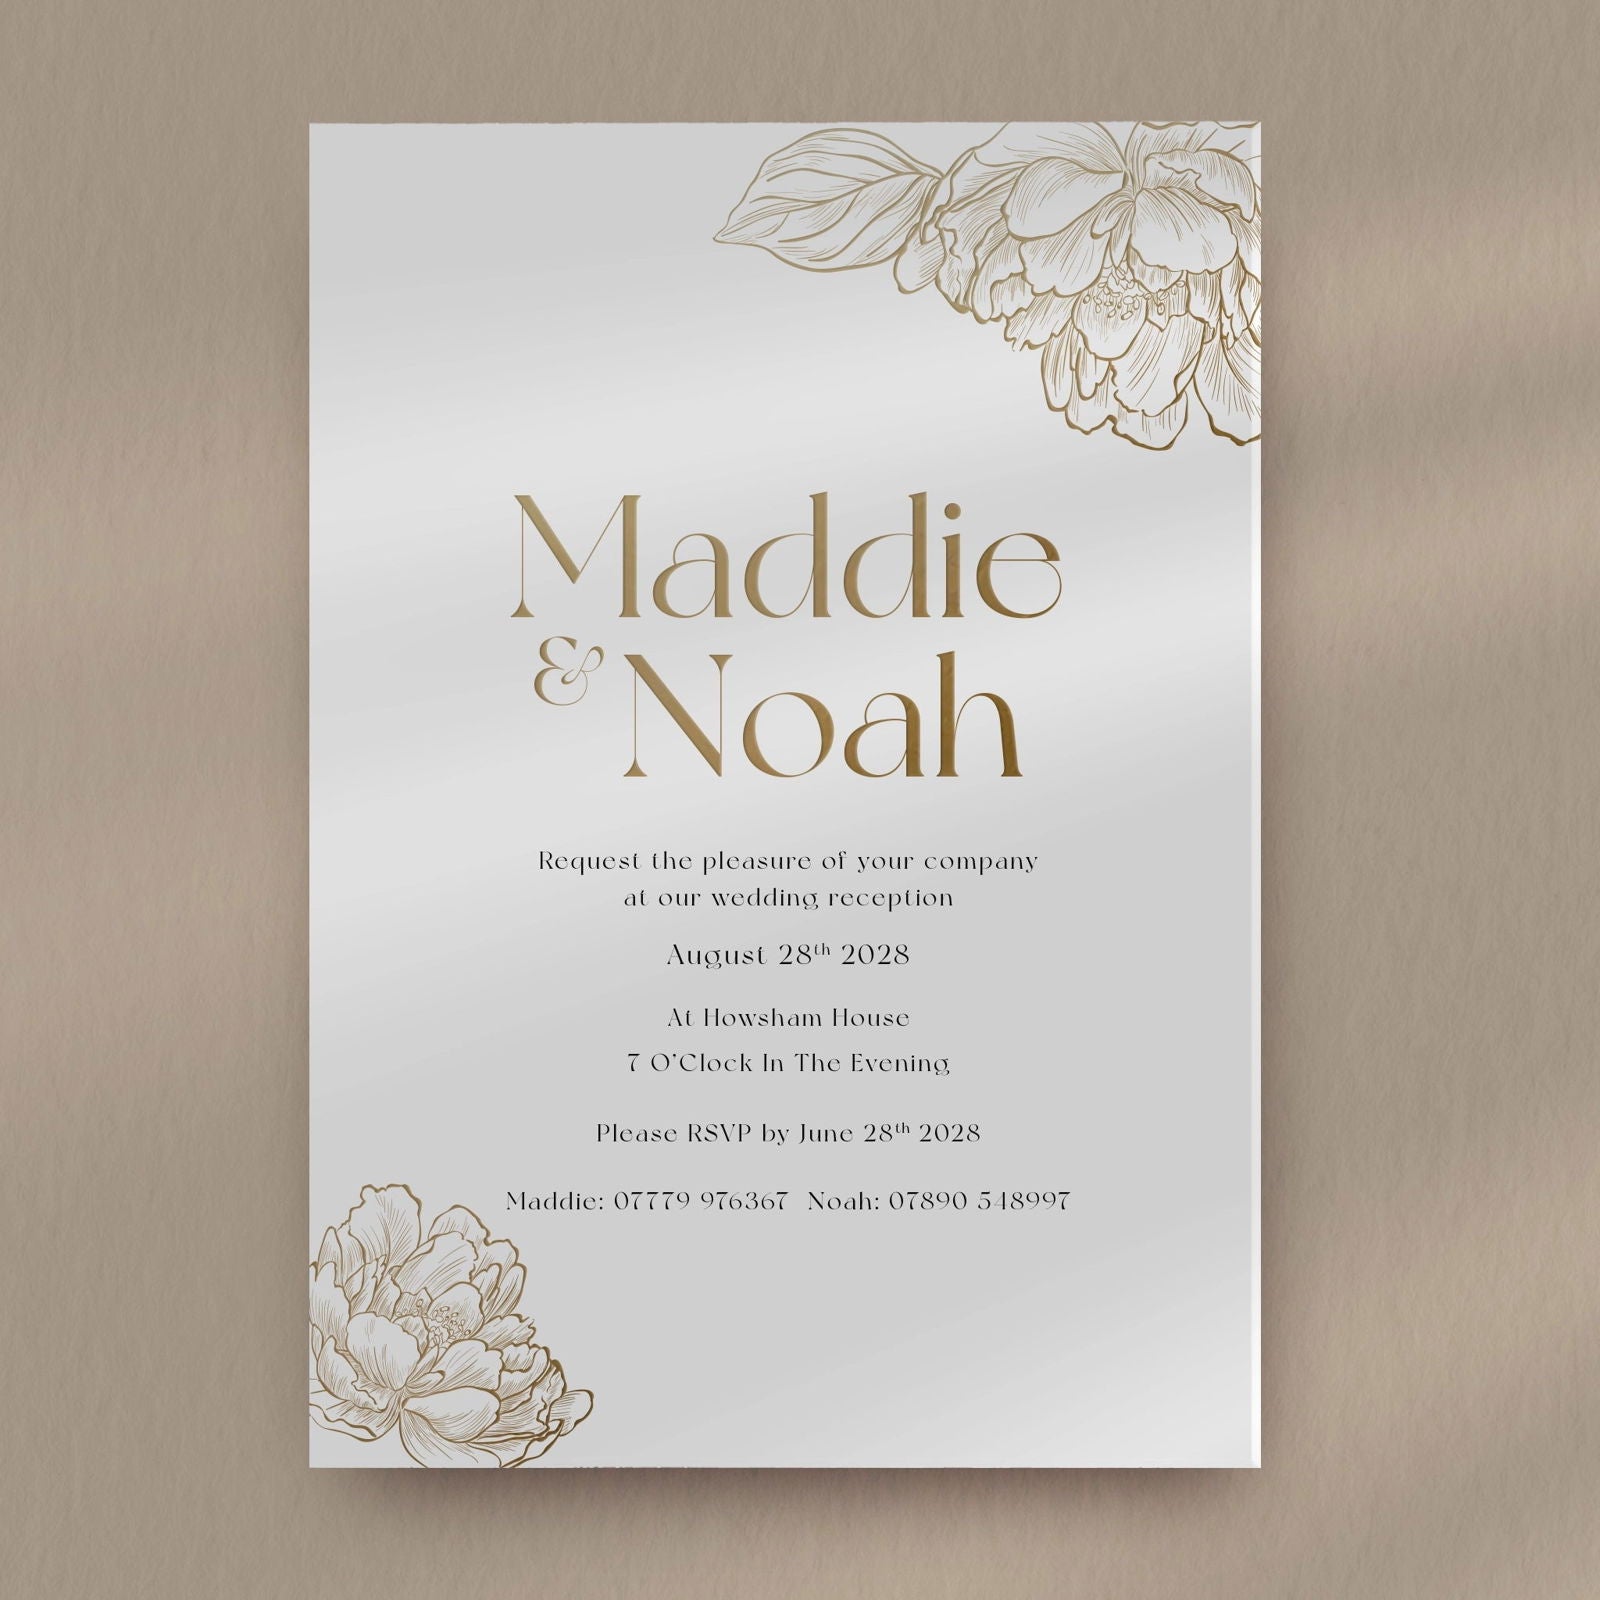 Maddie Evening Invitation  Ivy and Gold Wedding Stationery   